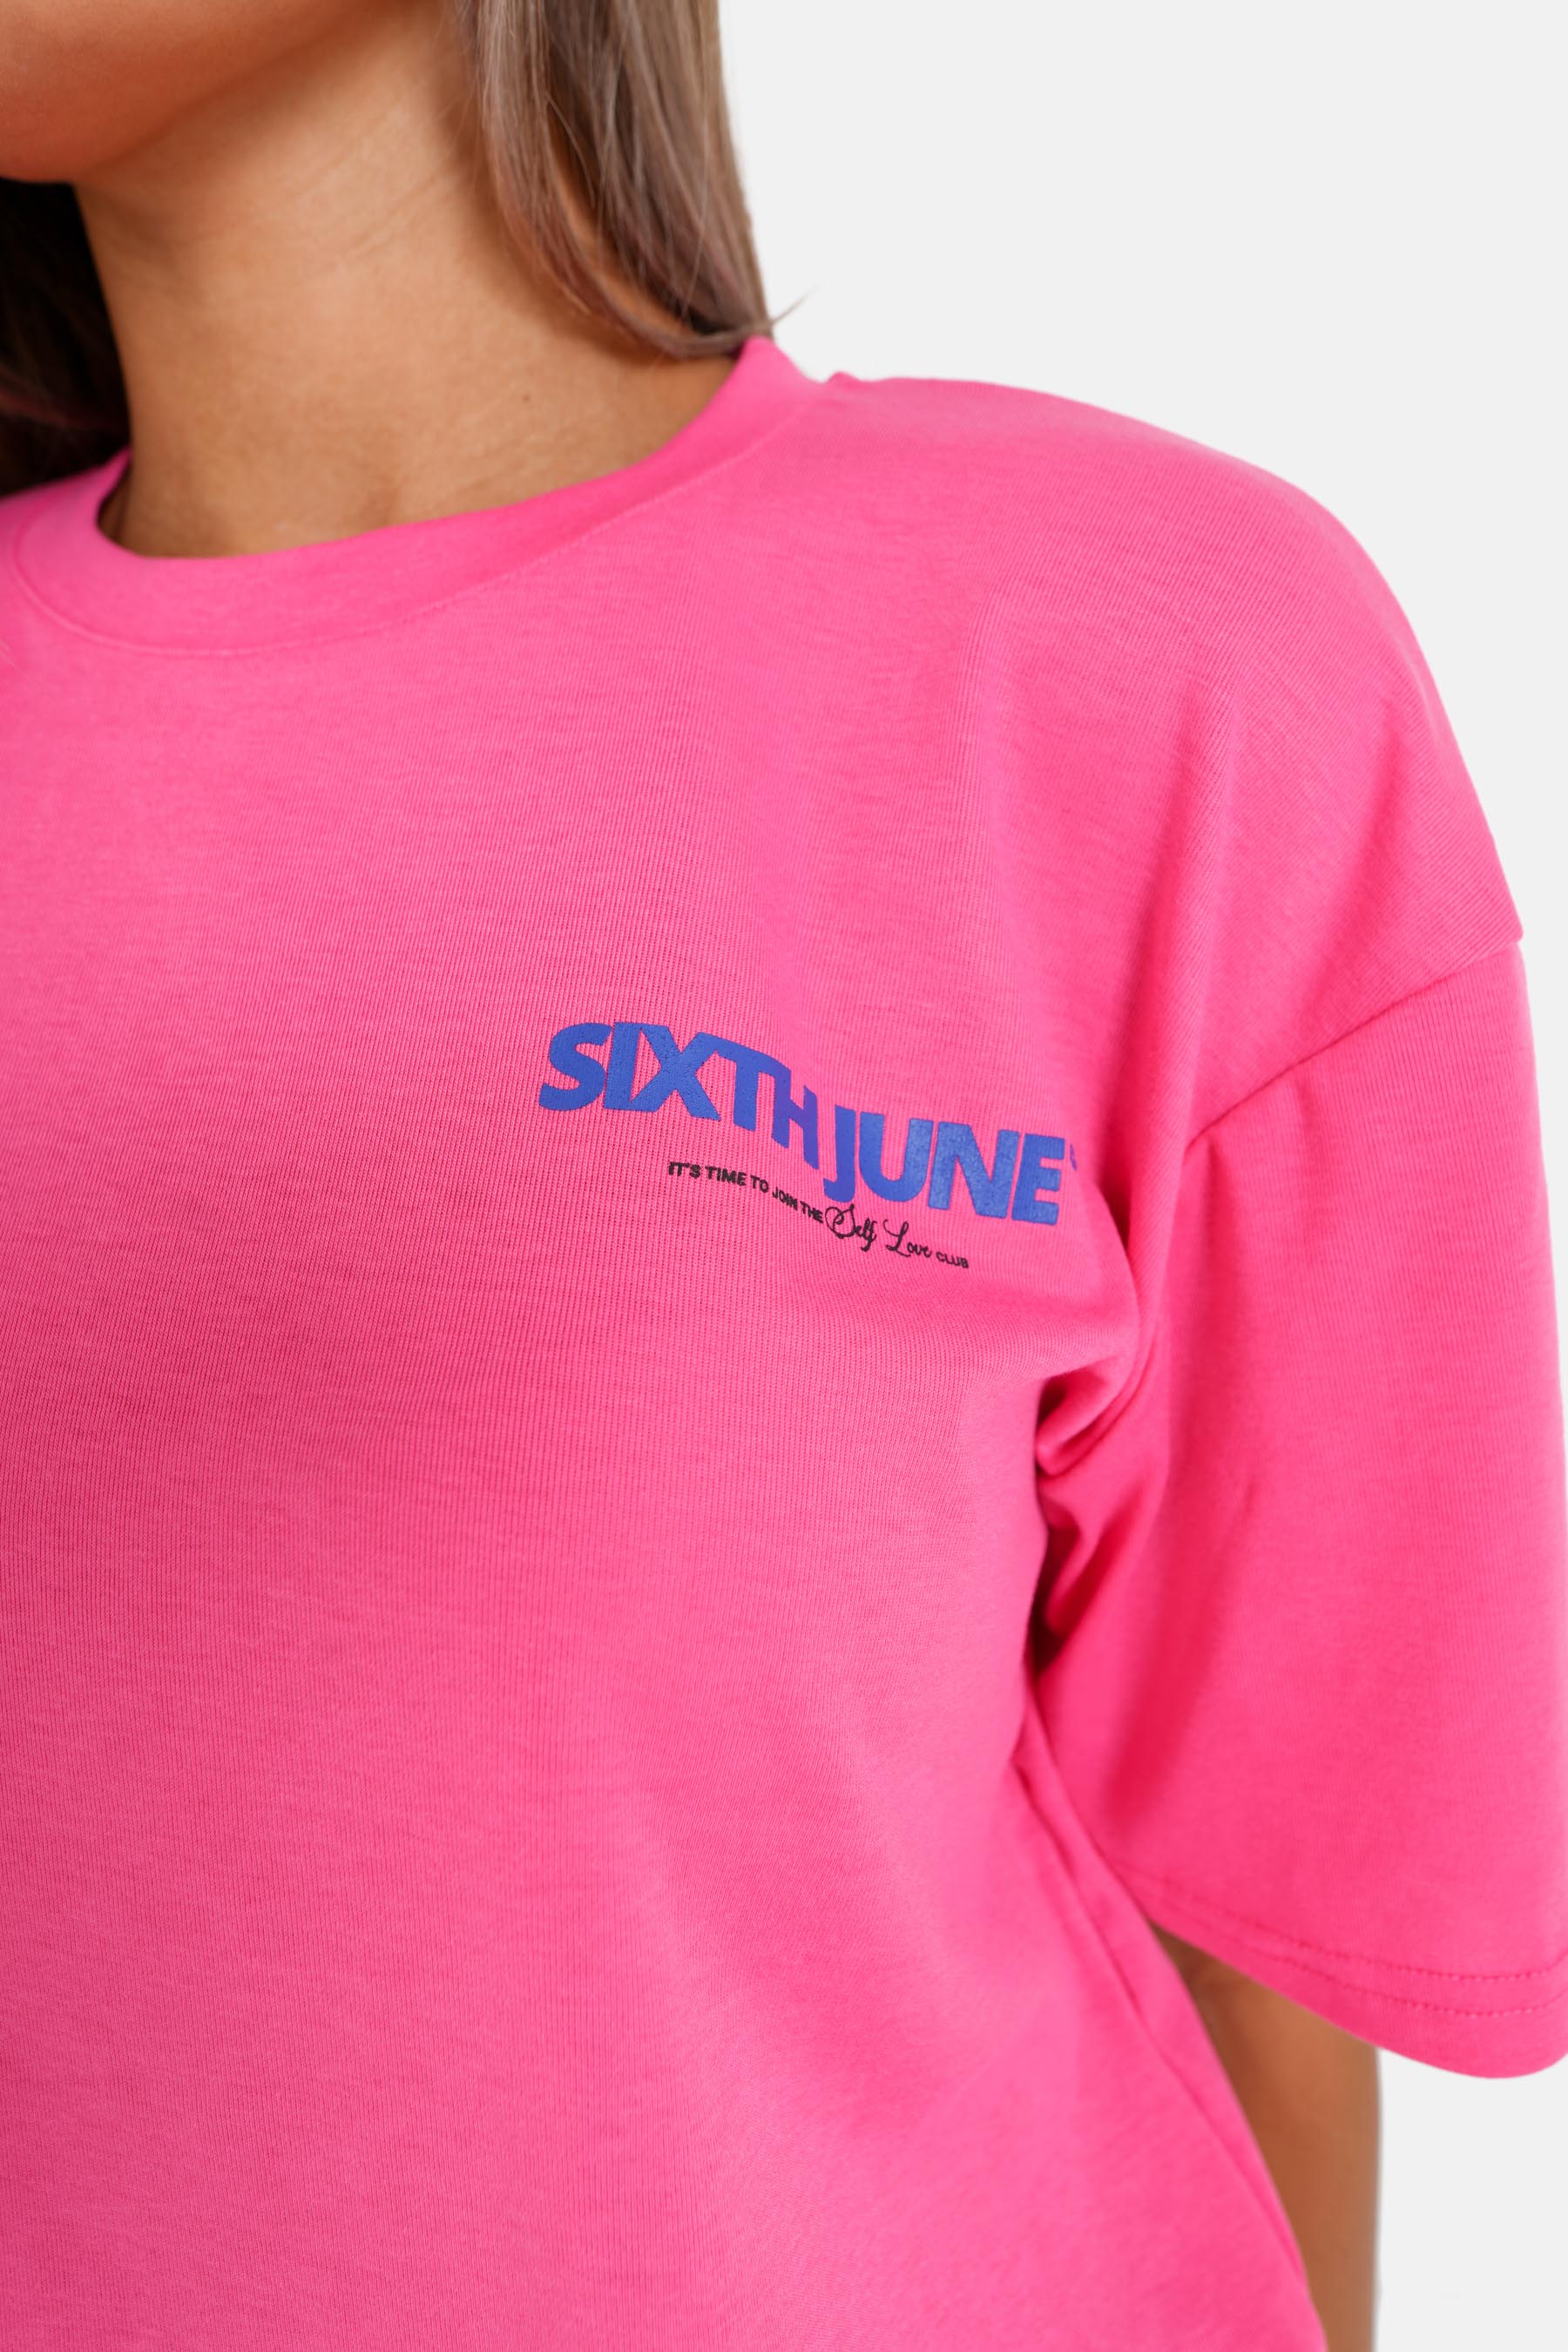 Sixth June - T-shirt long logo court Rose foncé